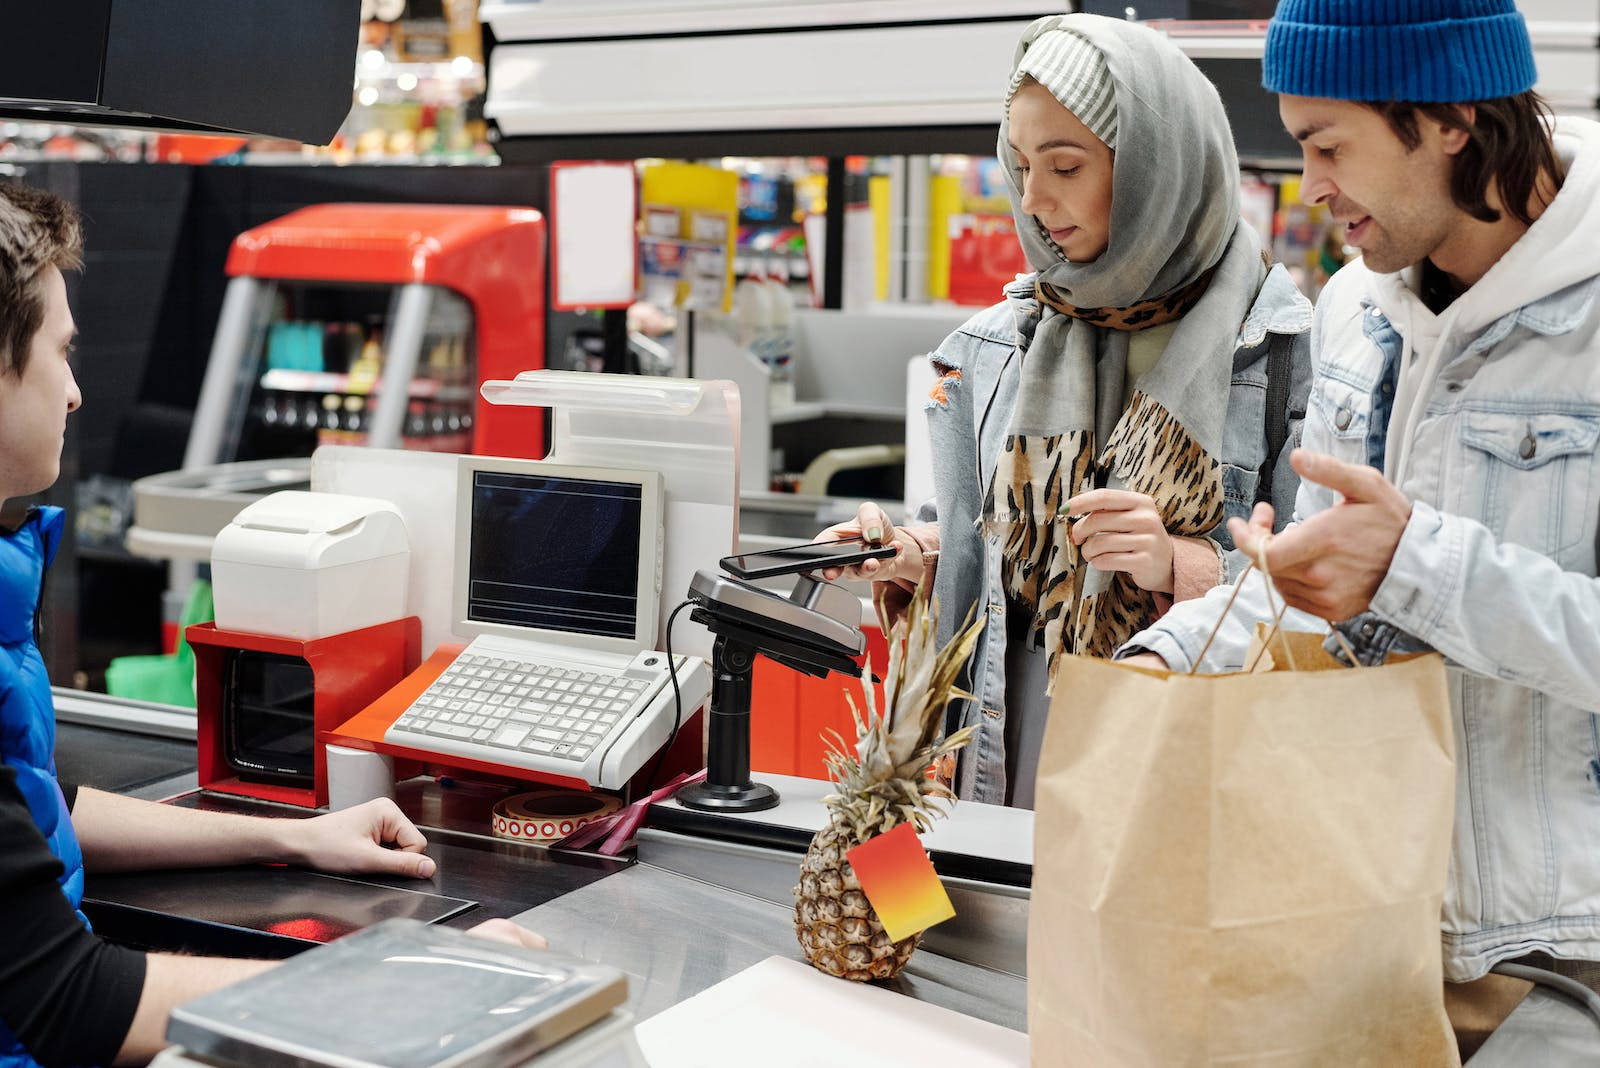 Muslim Couple At Supermarket